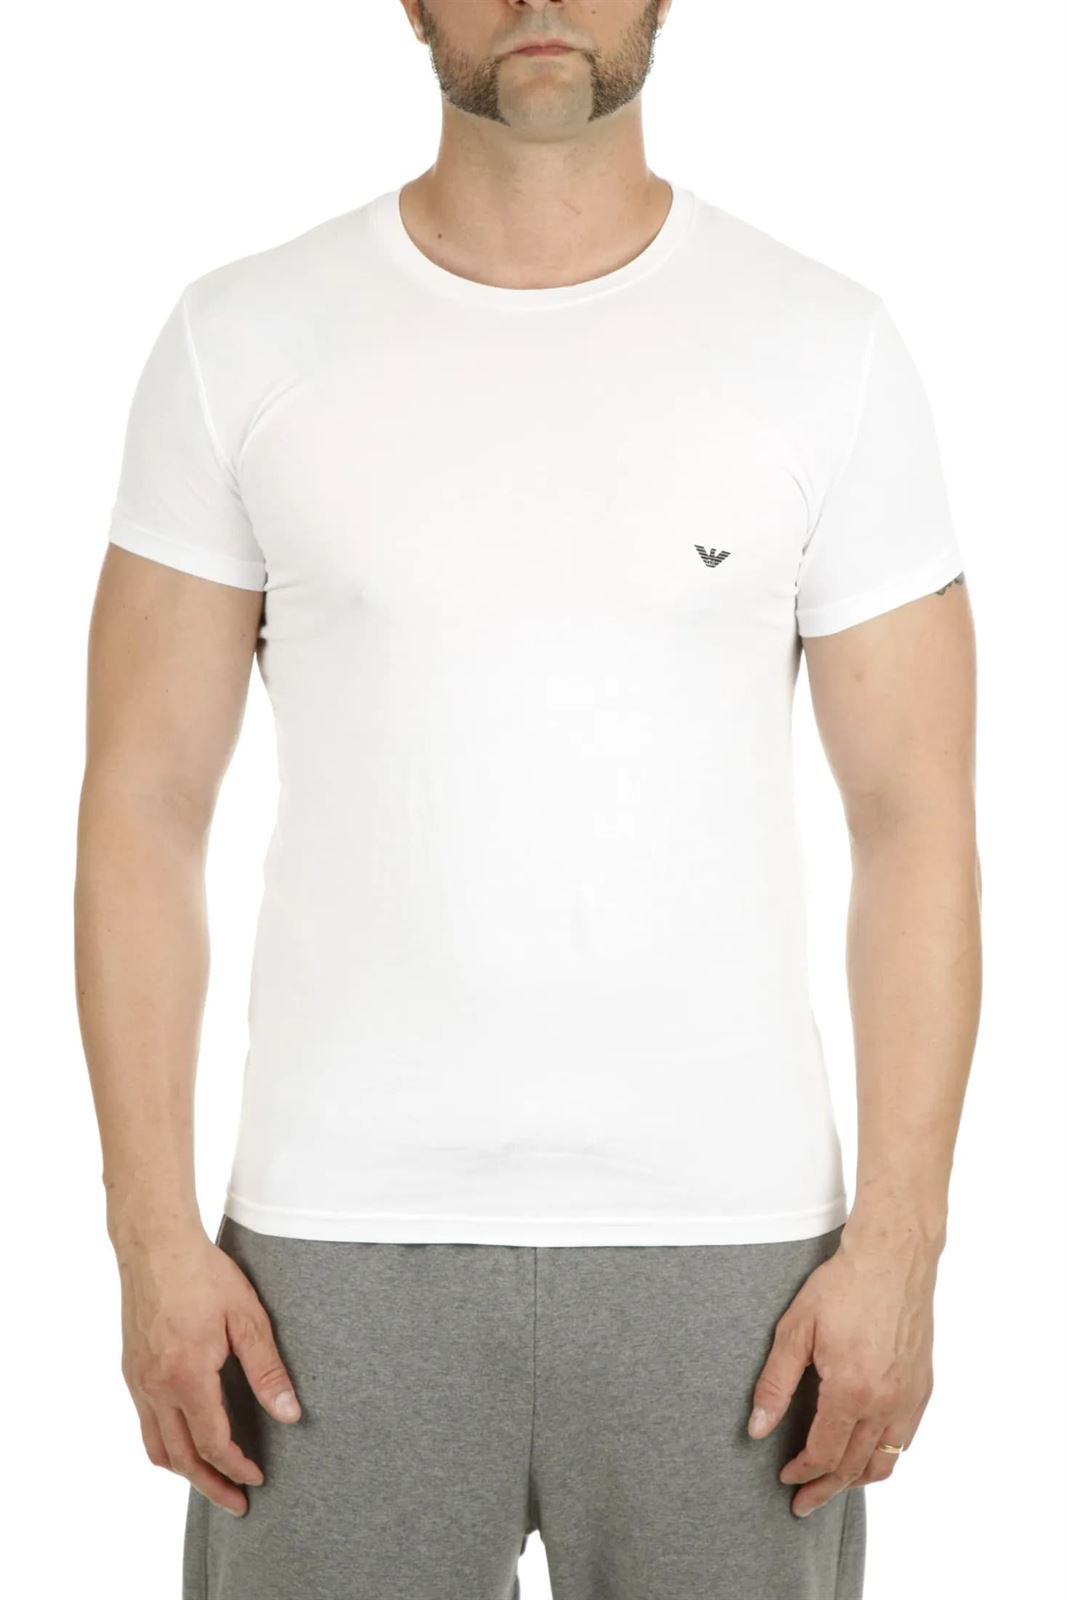 Camiseta Emporio Armani 111035 CC729 00010 blanco - Imagen 1